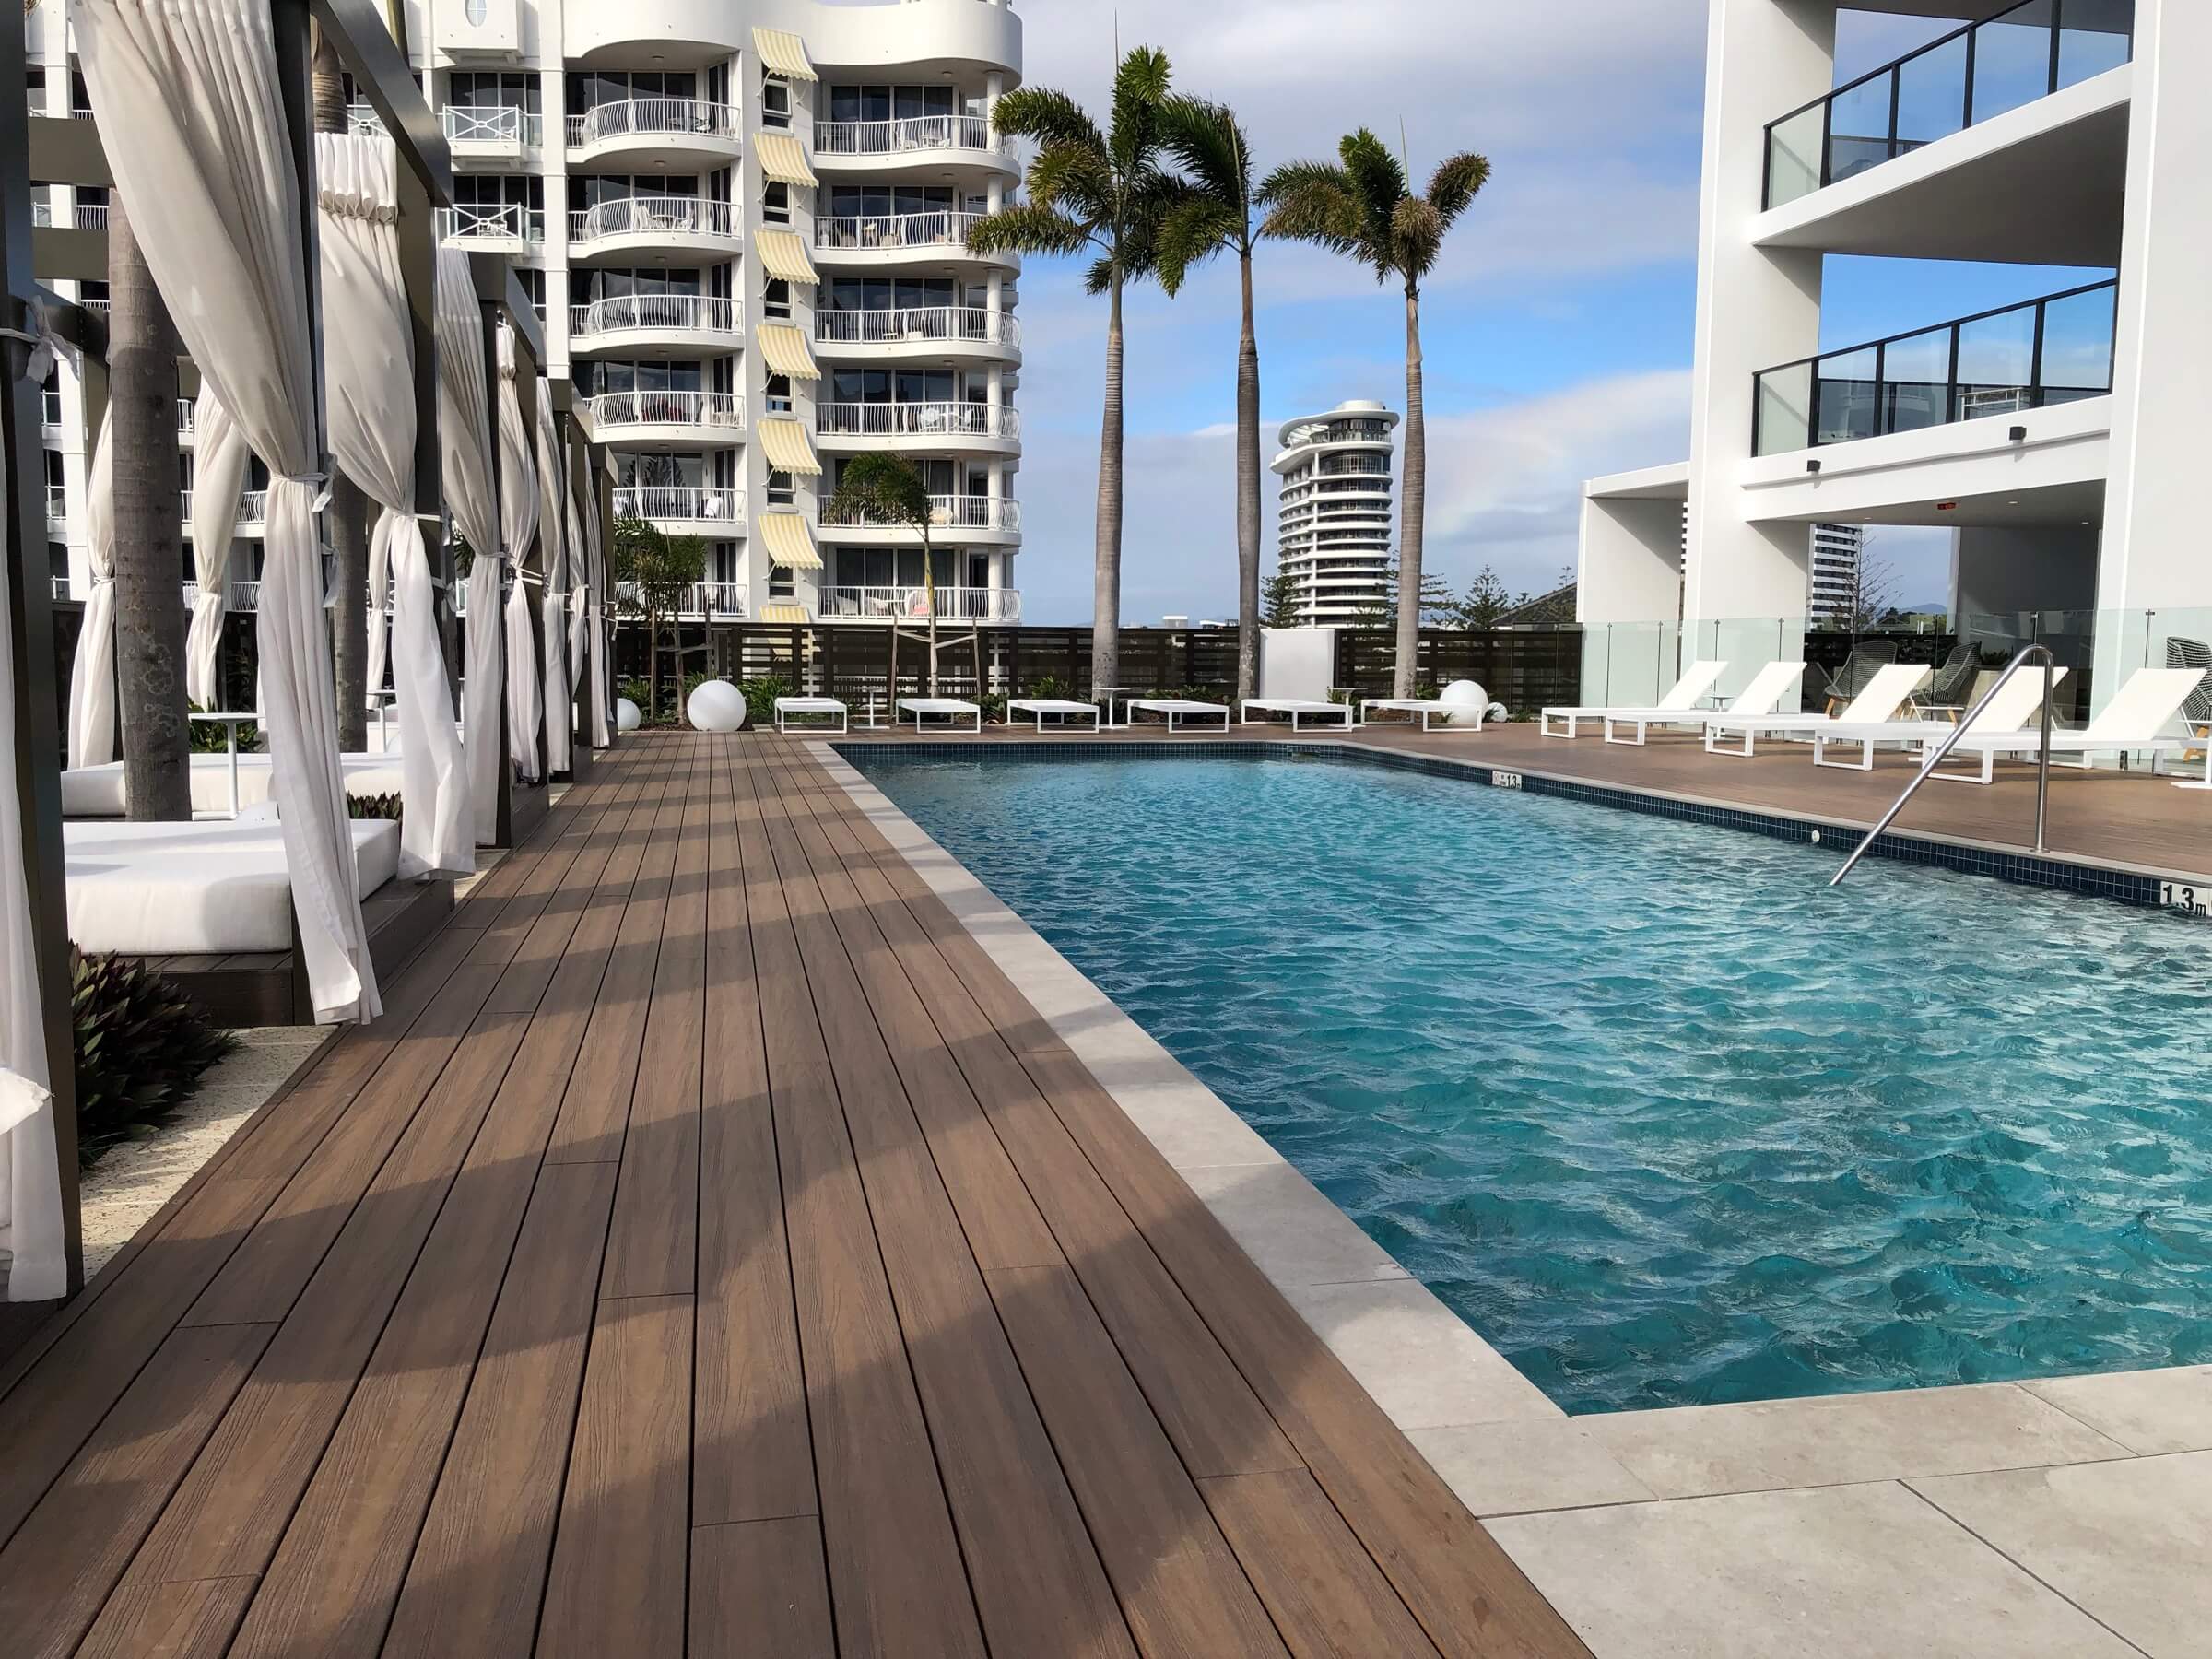 Poolside composite decking Australia